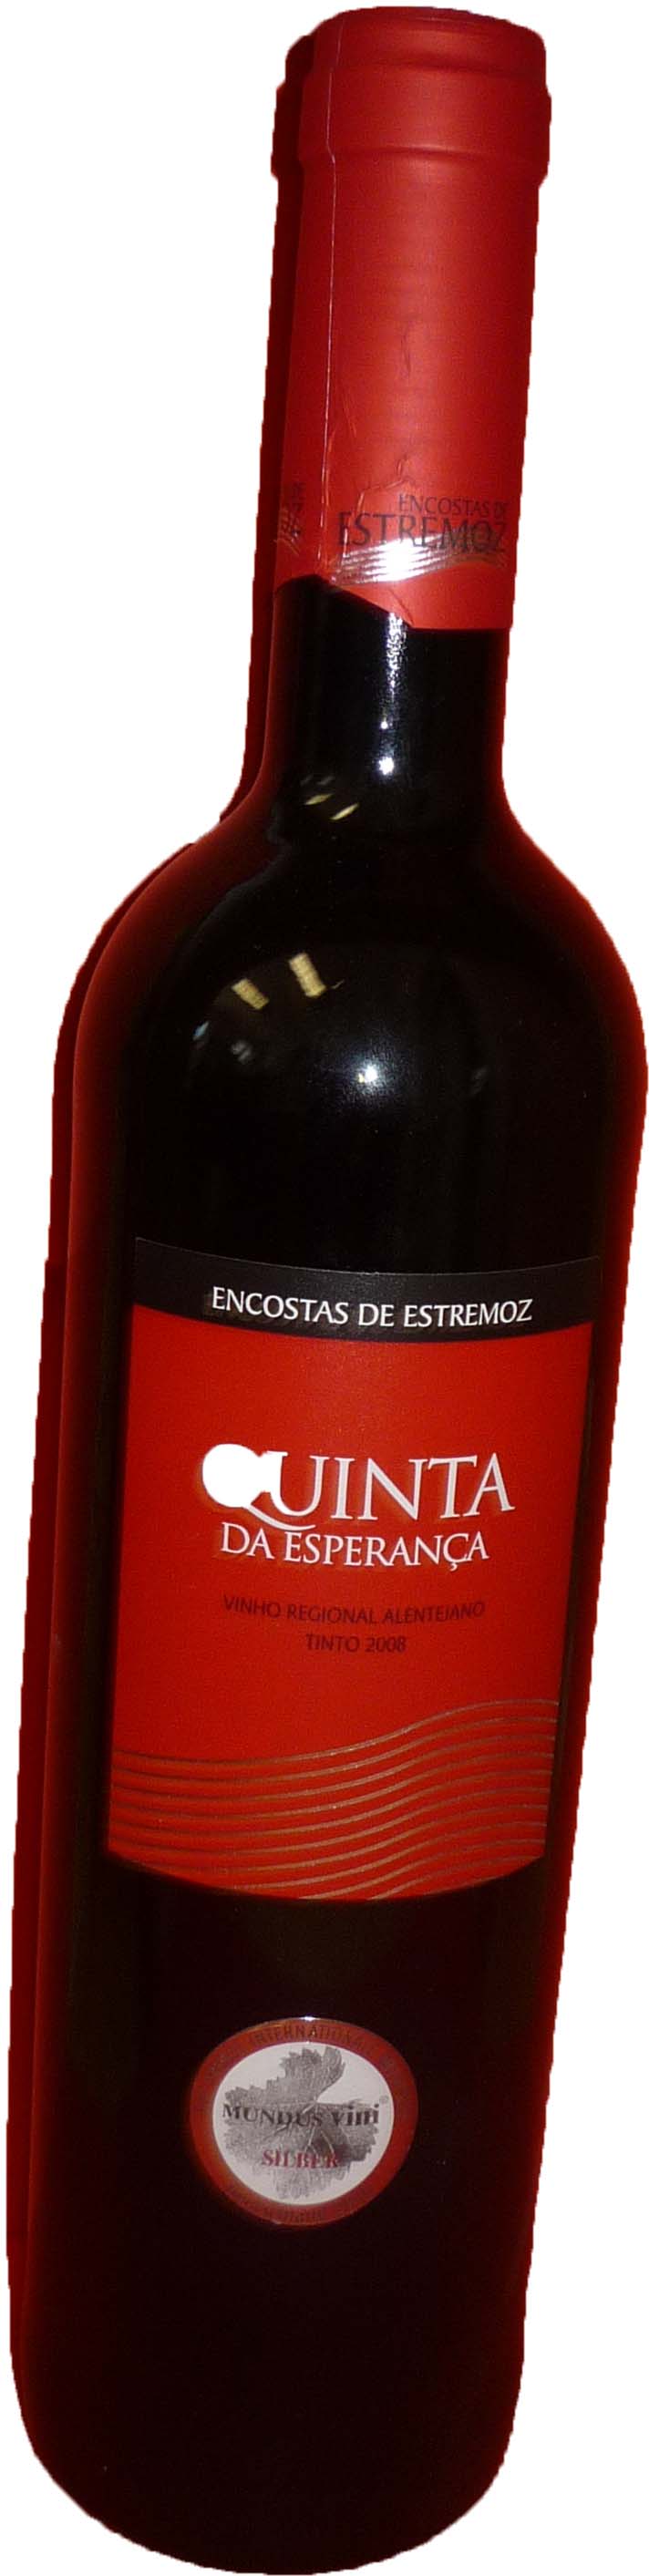 Quinta Da Esperanca 2008